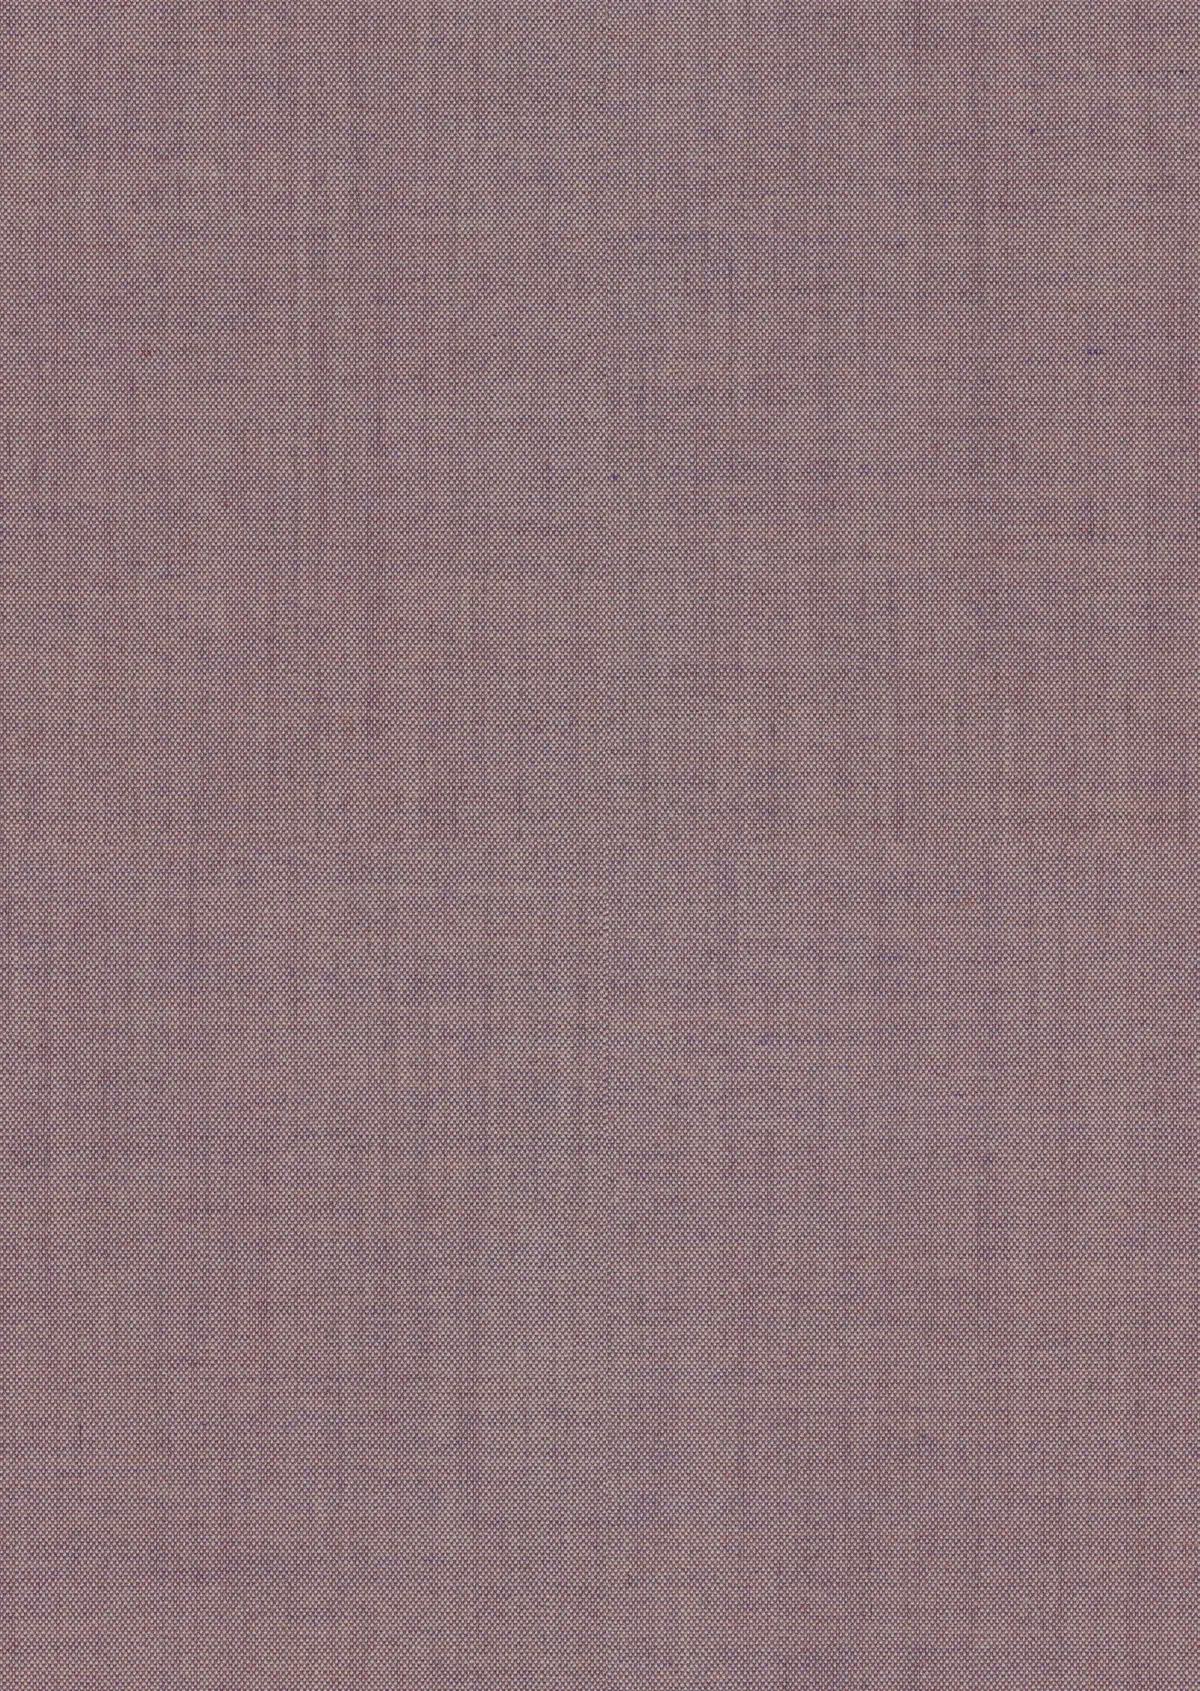 Fabric sample Remix 3 682 pink